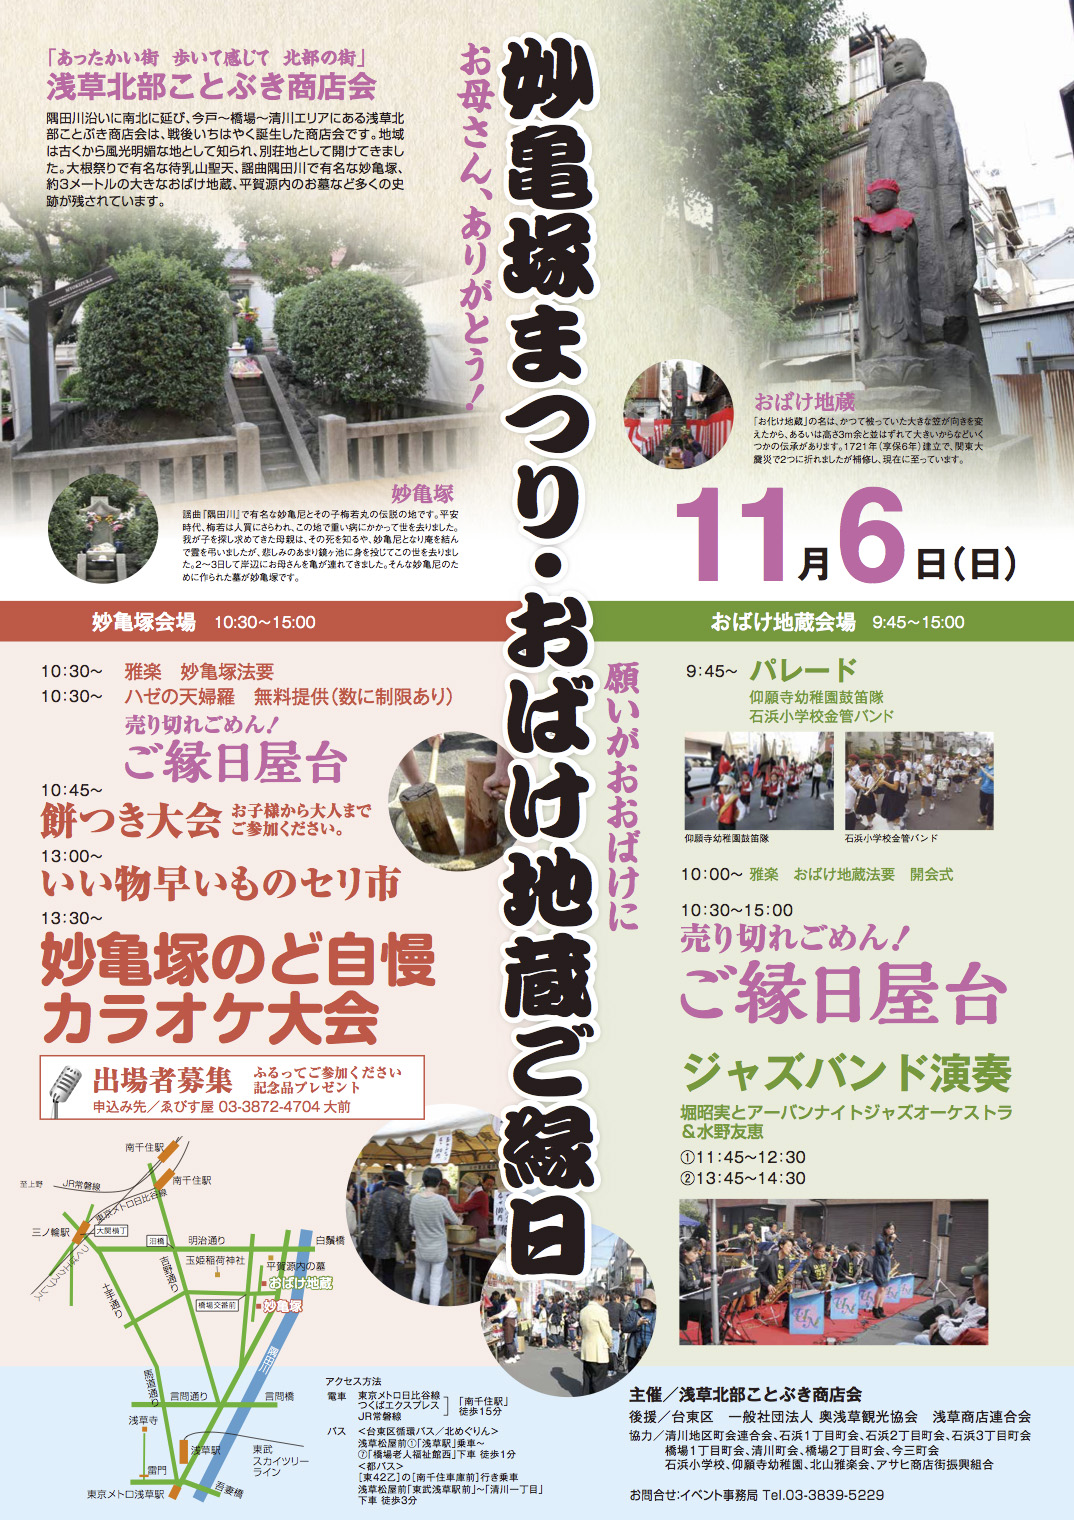 11/6/2016 Myoukizuka Obake jizo are fair and Festival